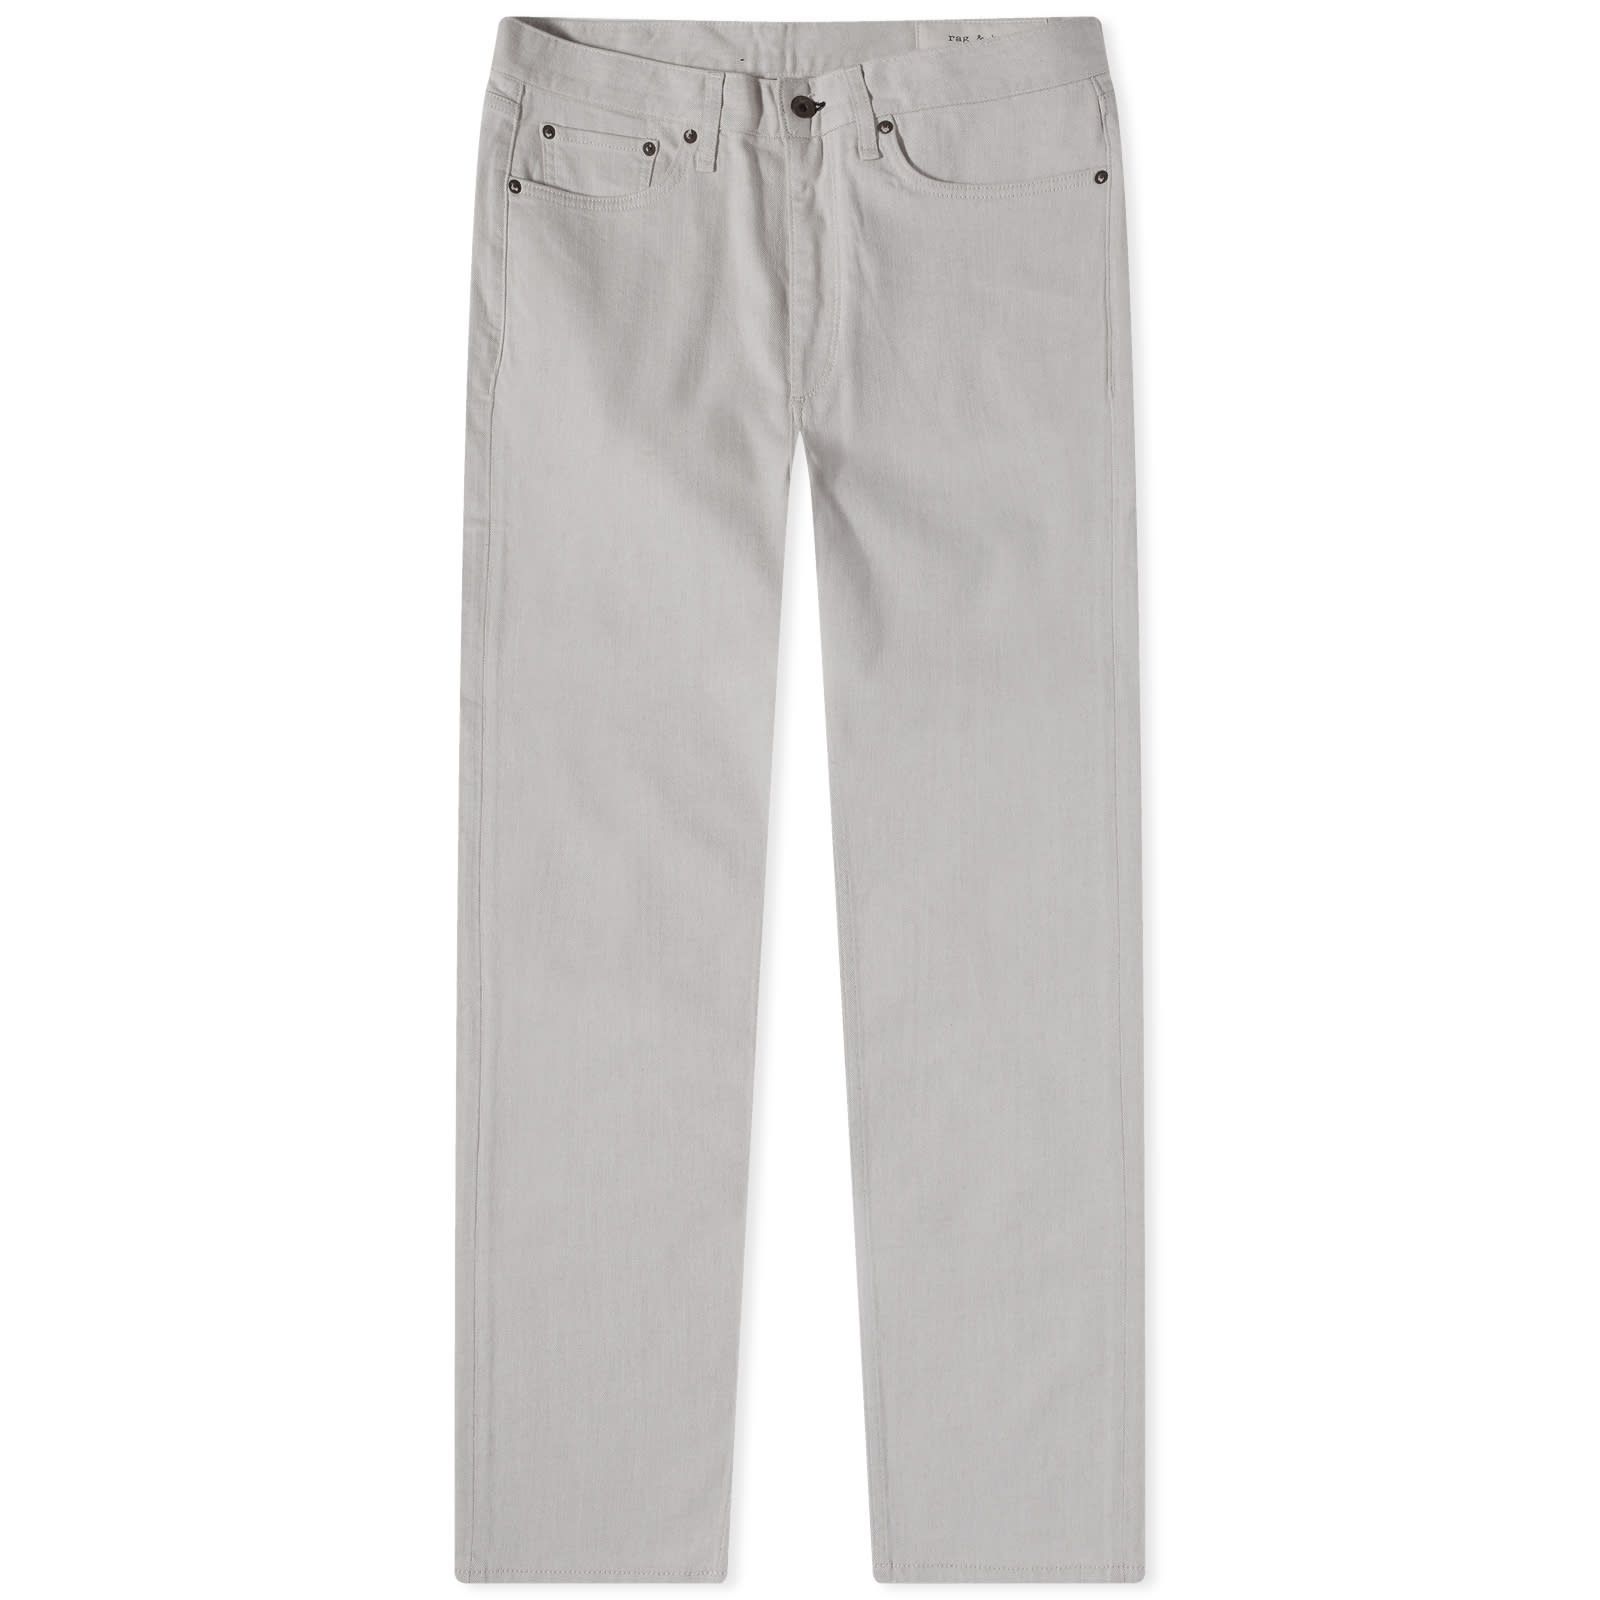 Fit 2 - Greyson: Slim Fit Light Grey Authentic Stretch Jean